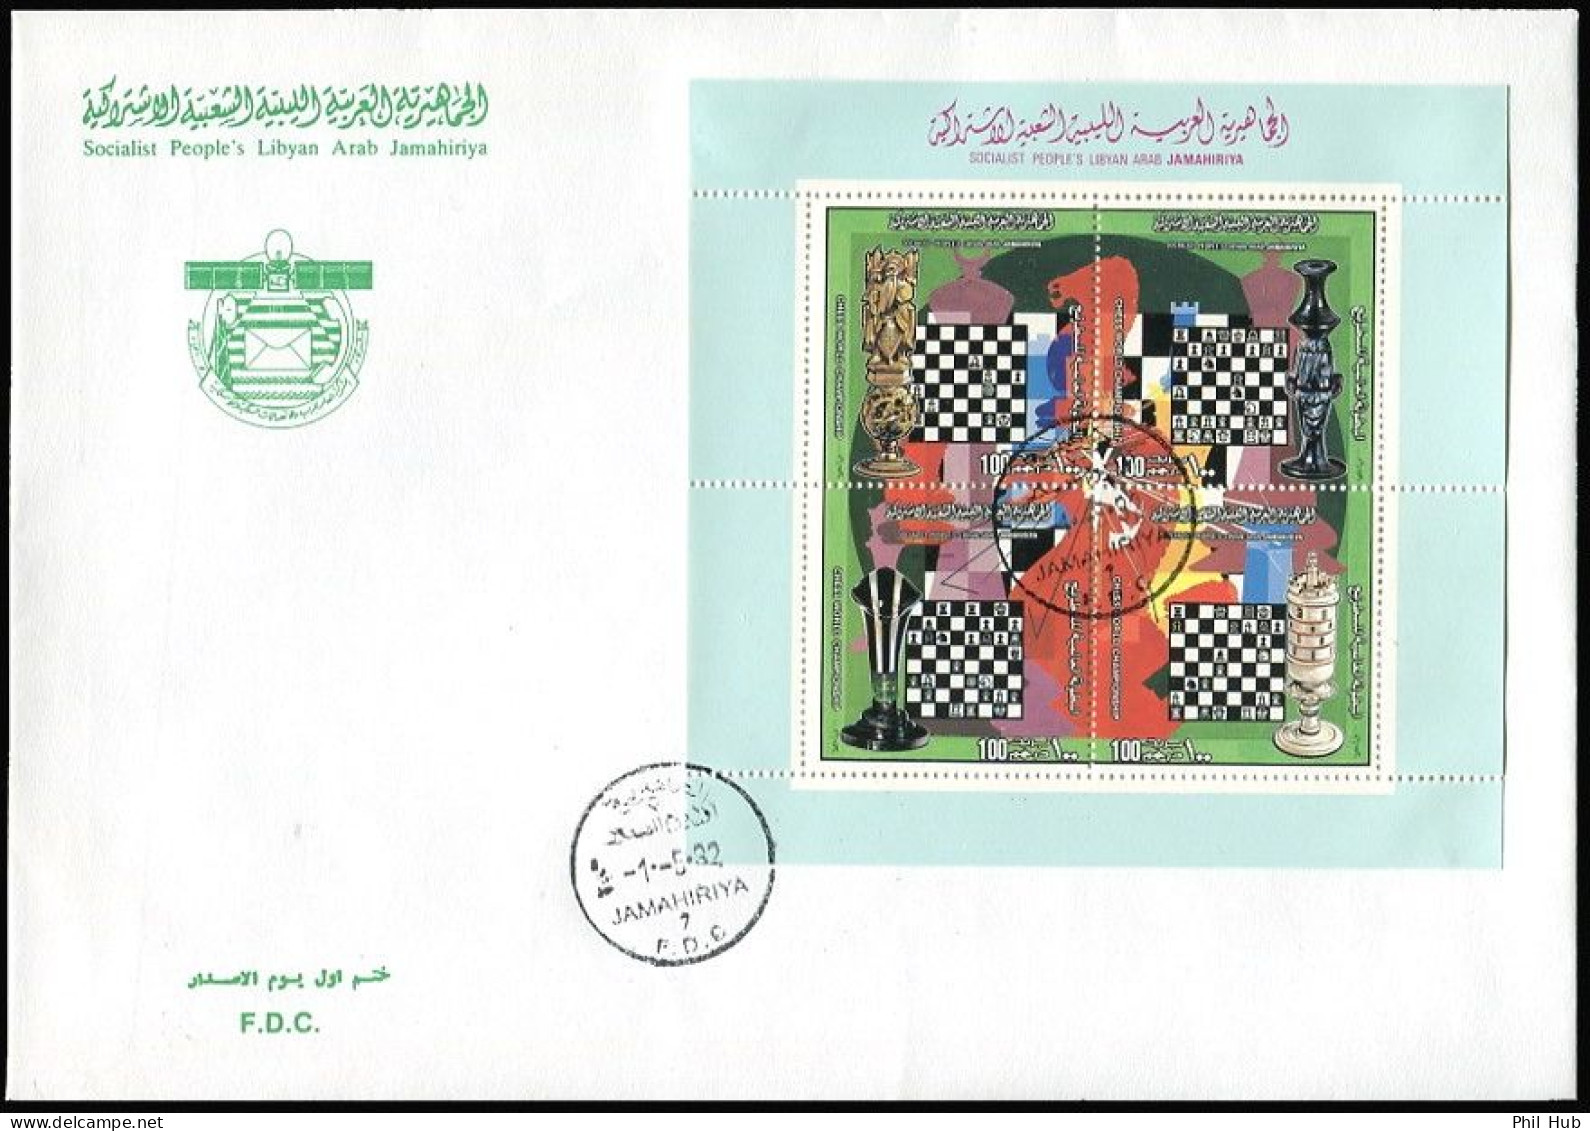 LIBYA 1982 Chess (de-luxe Ss FDC) - Chess